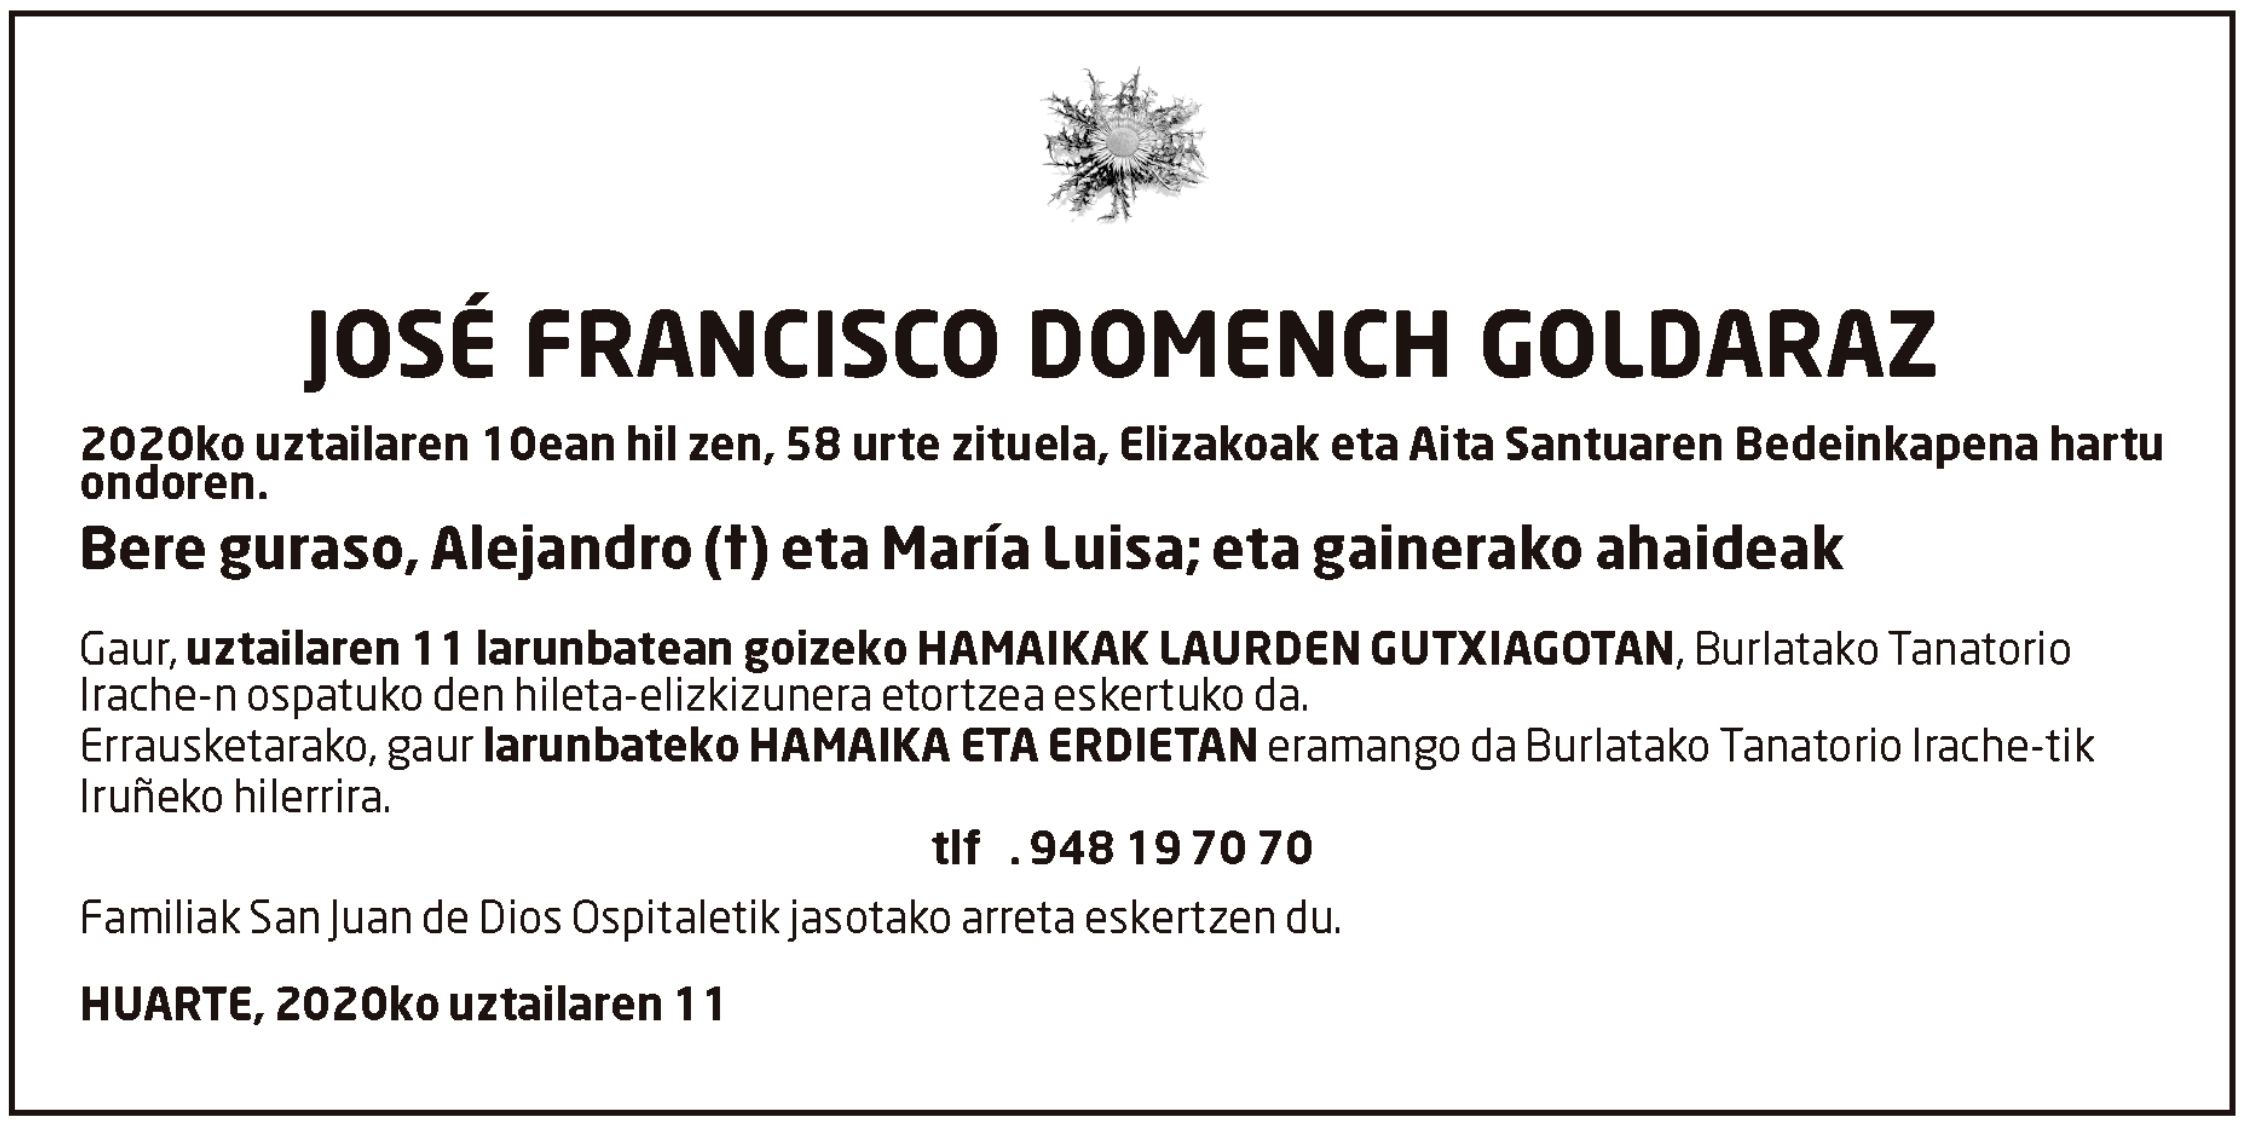 Jose%cc%81-francisco-domench-goldaraz-1